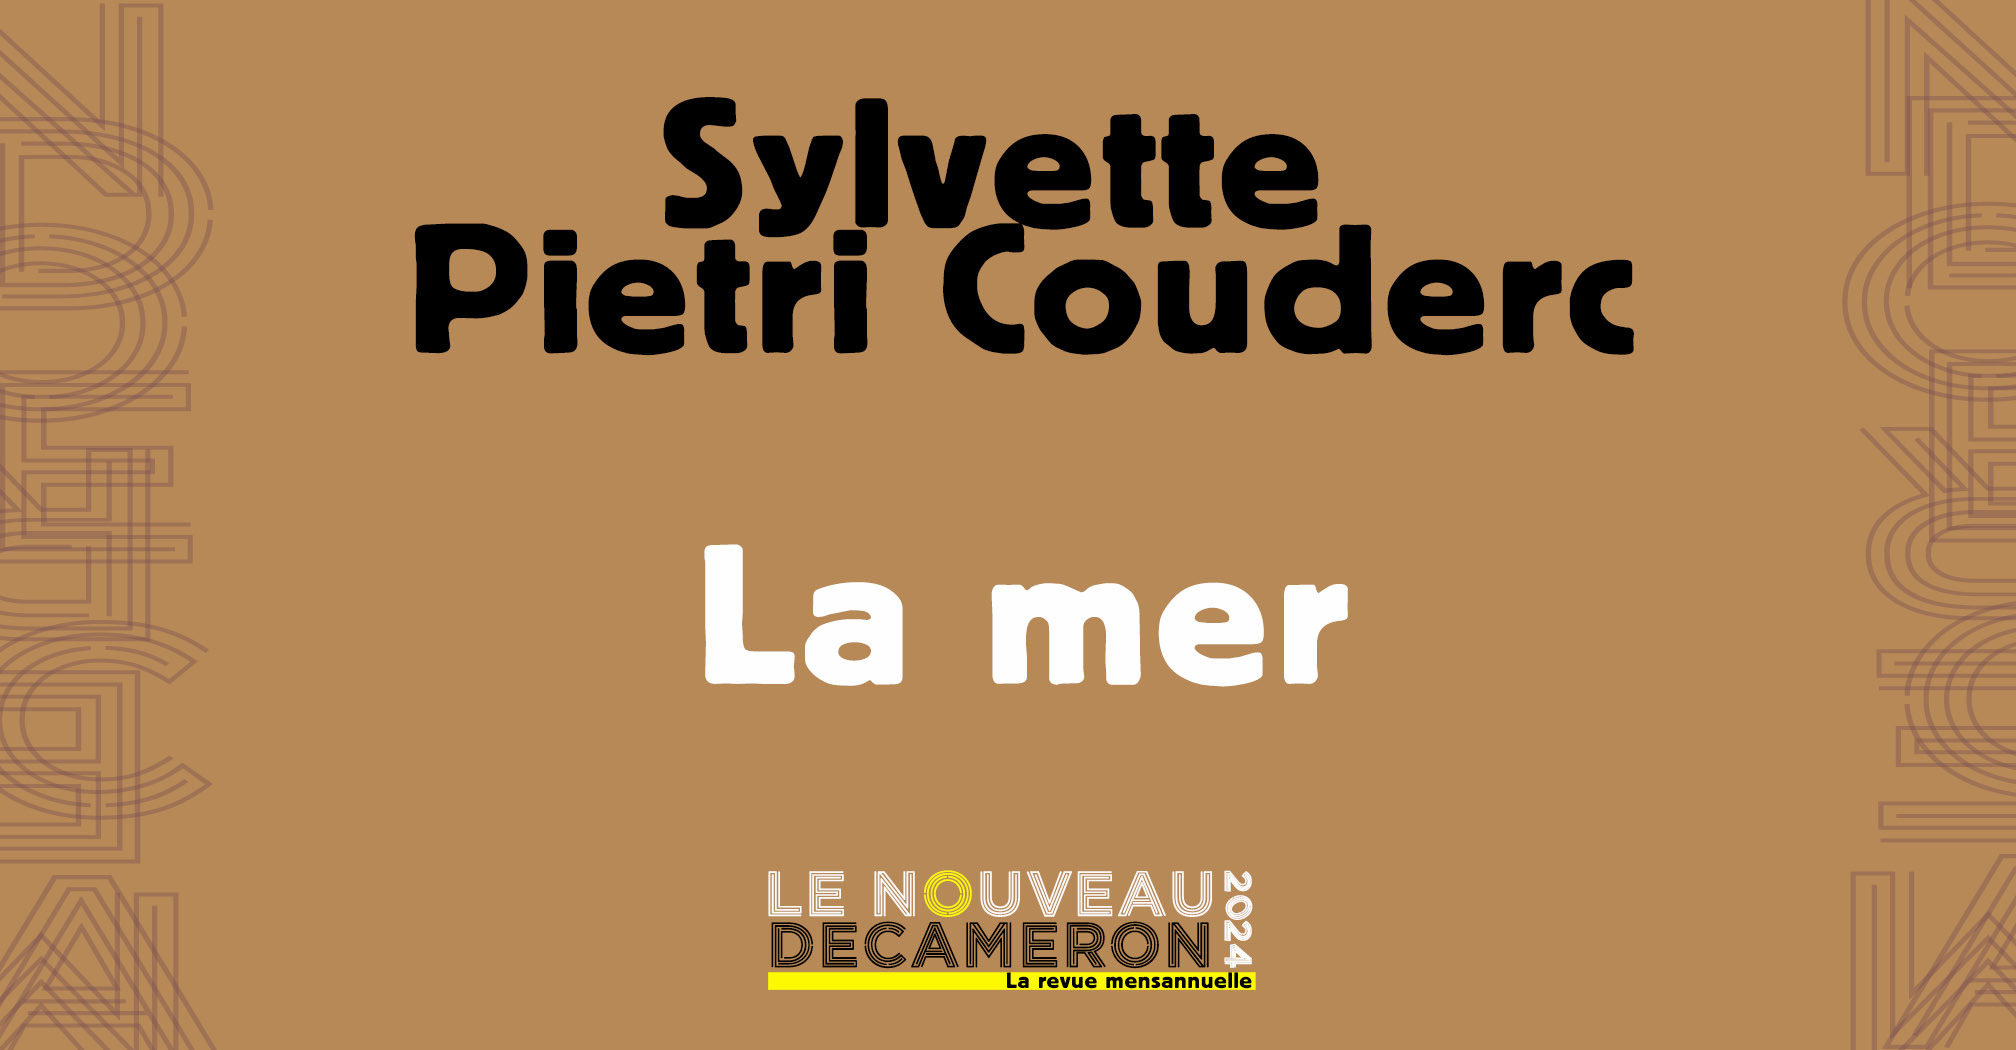 Sylvette Pietri-Couderc - La mer